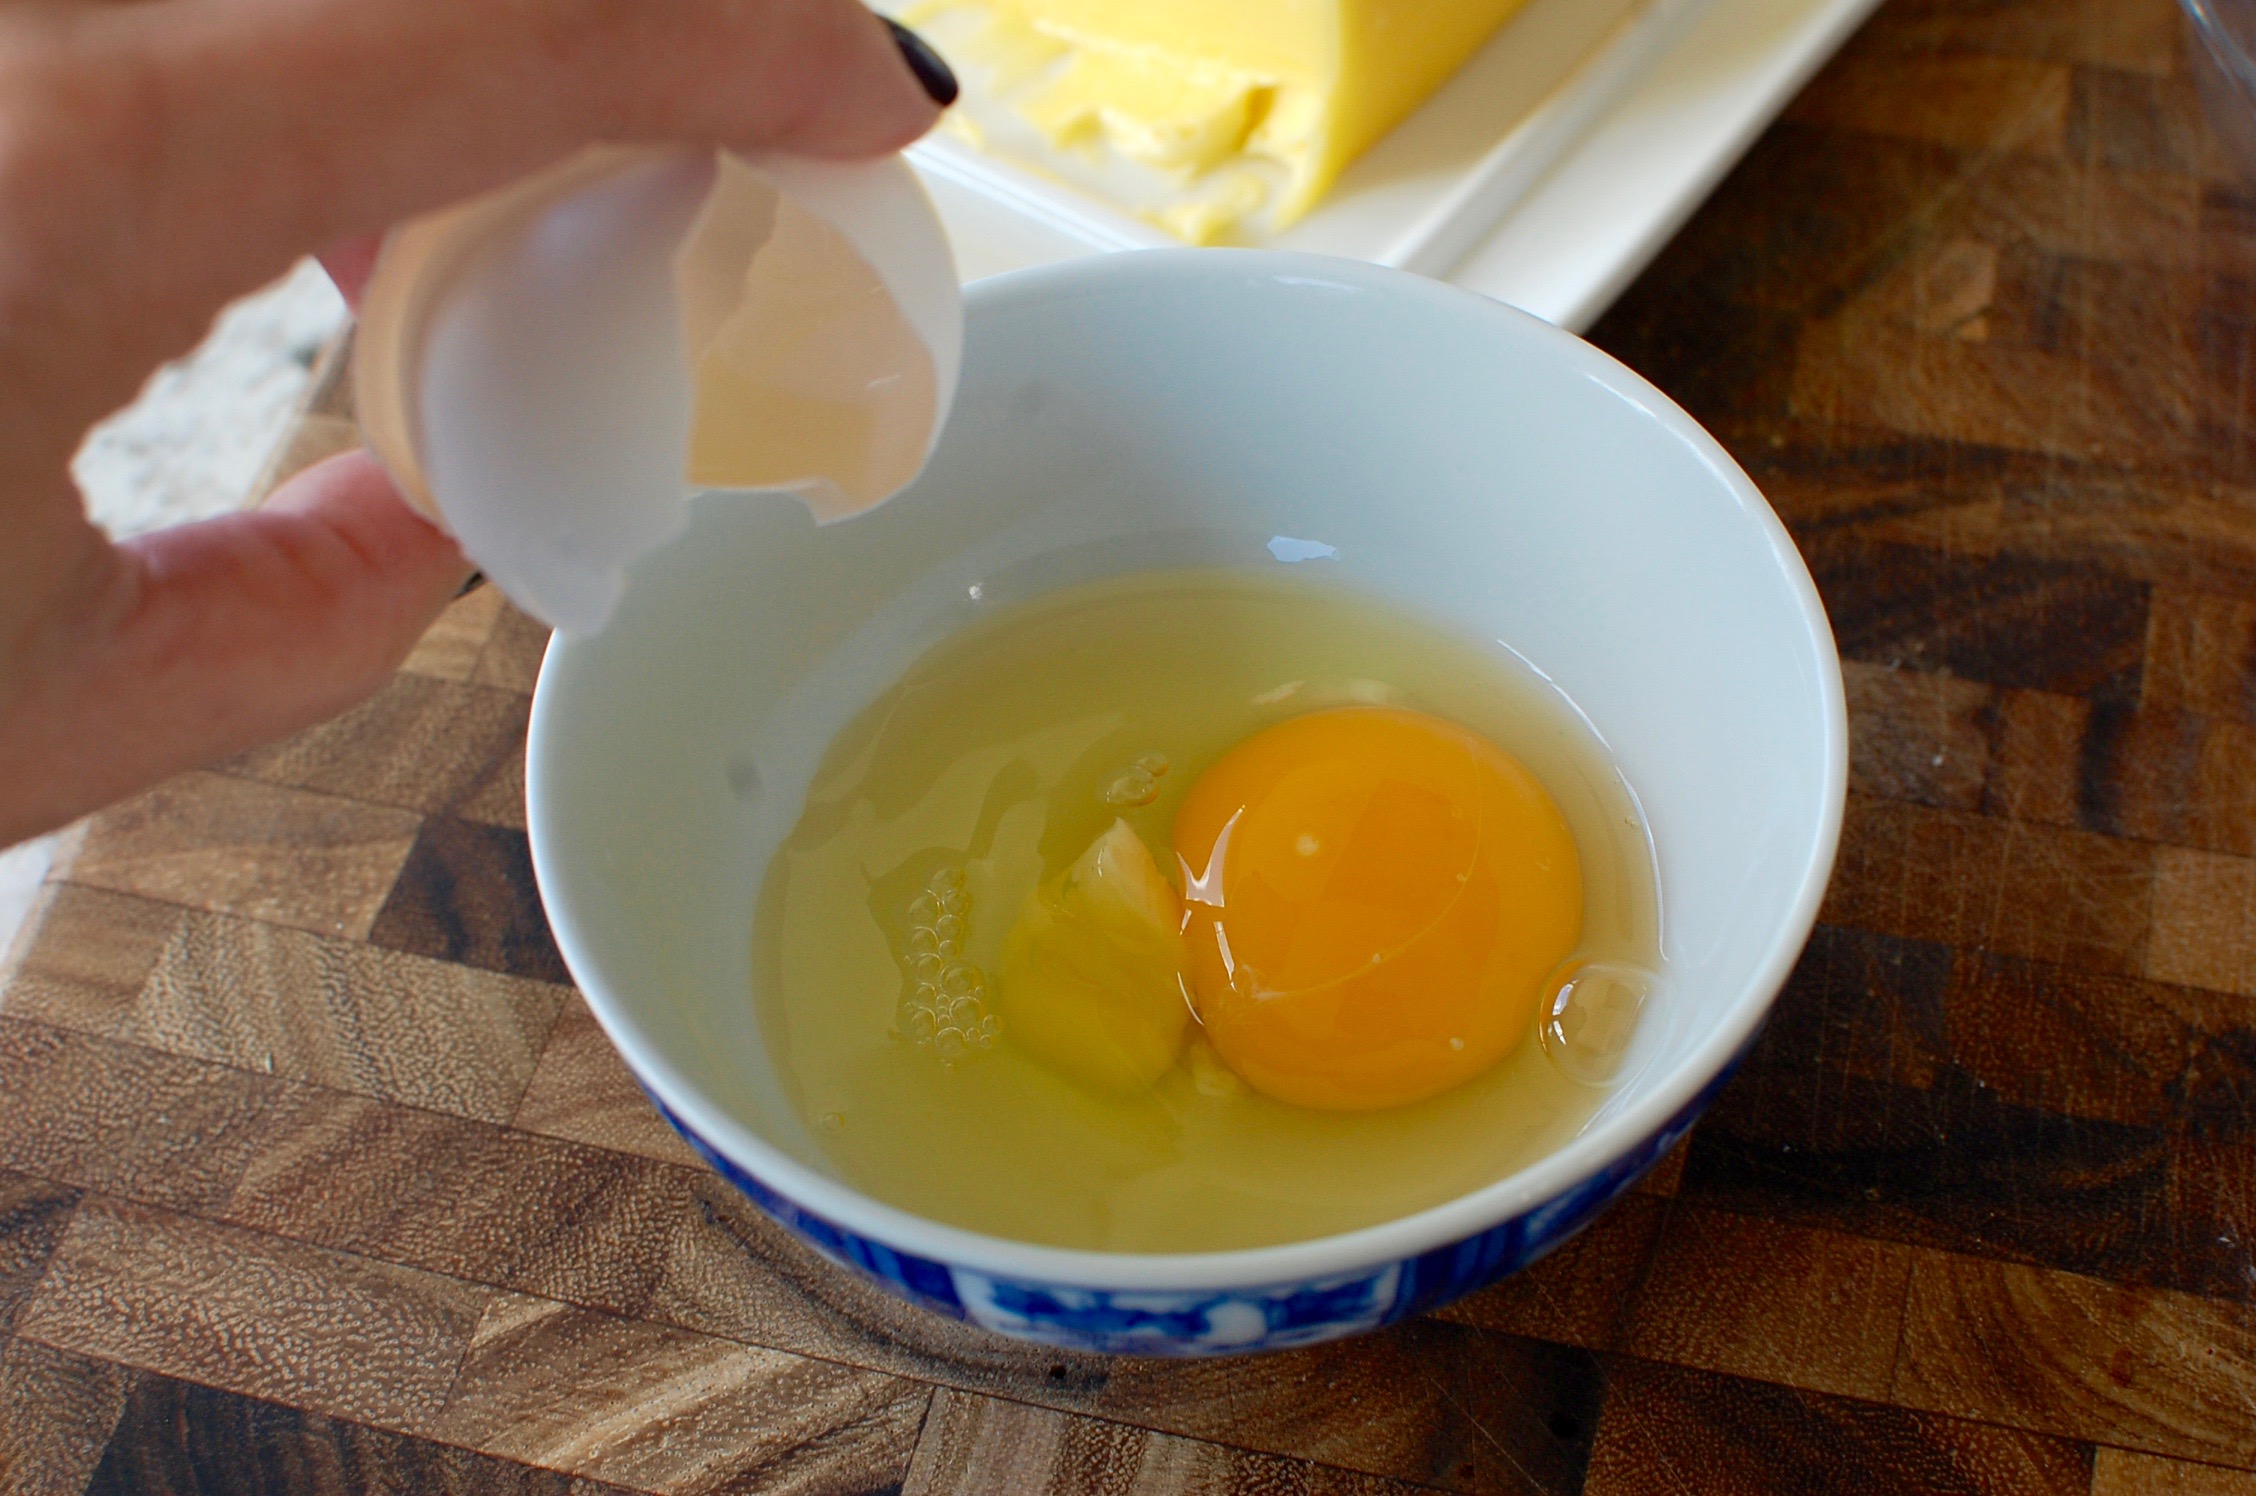 microwave egg